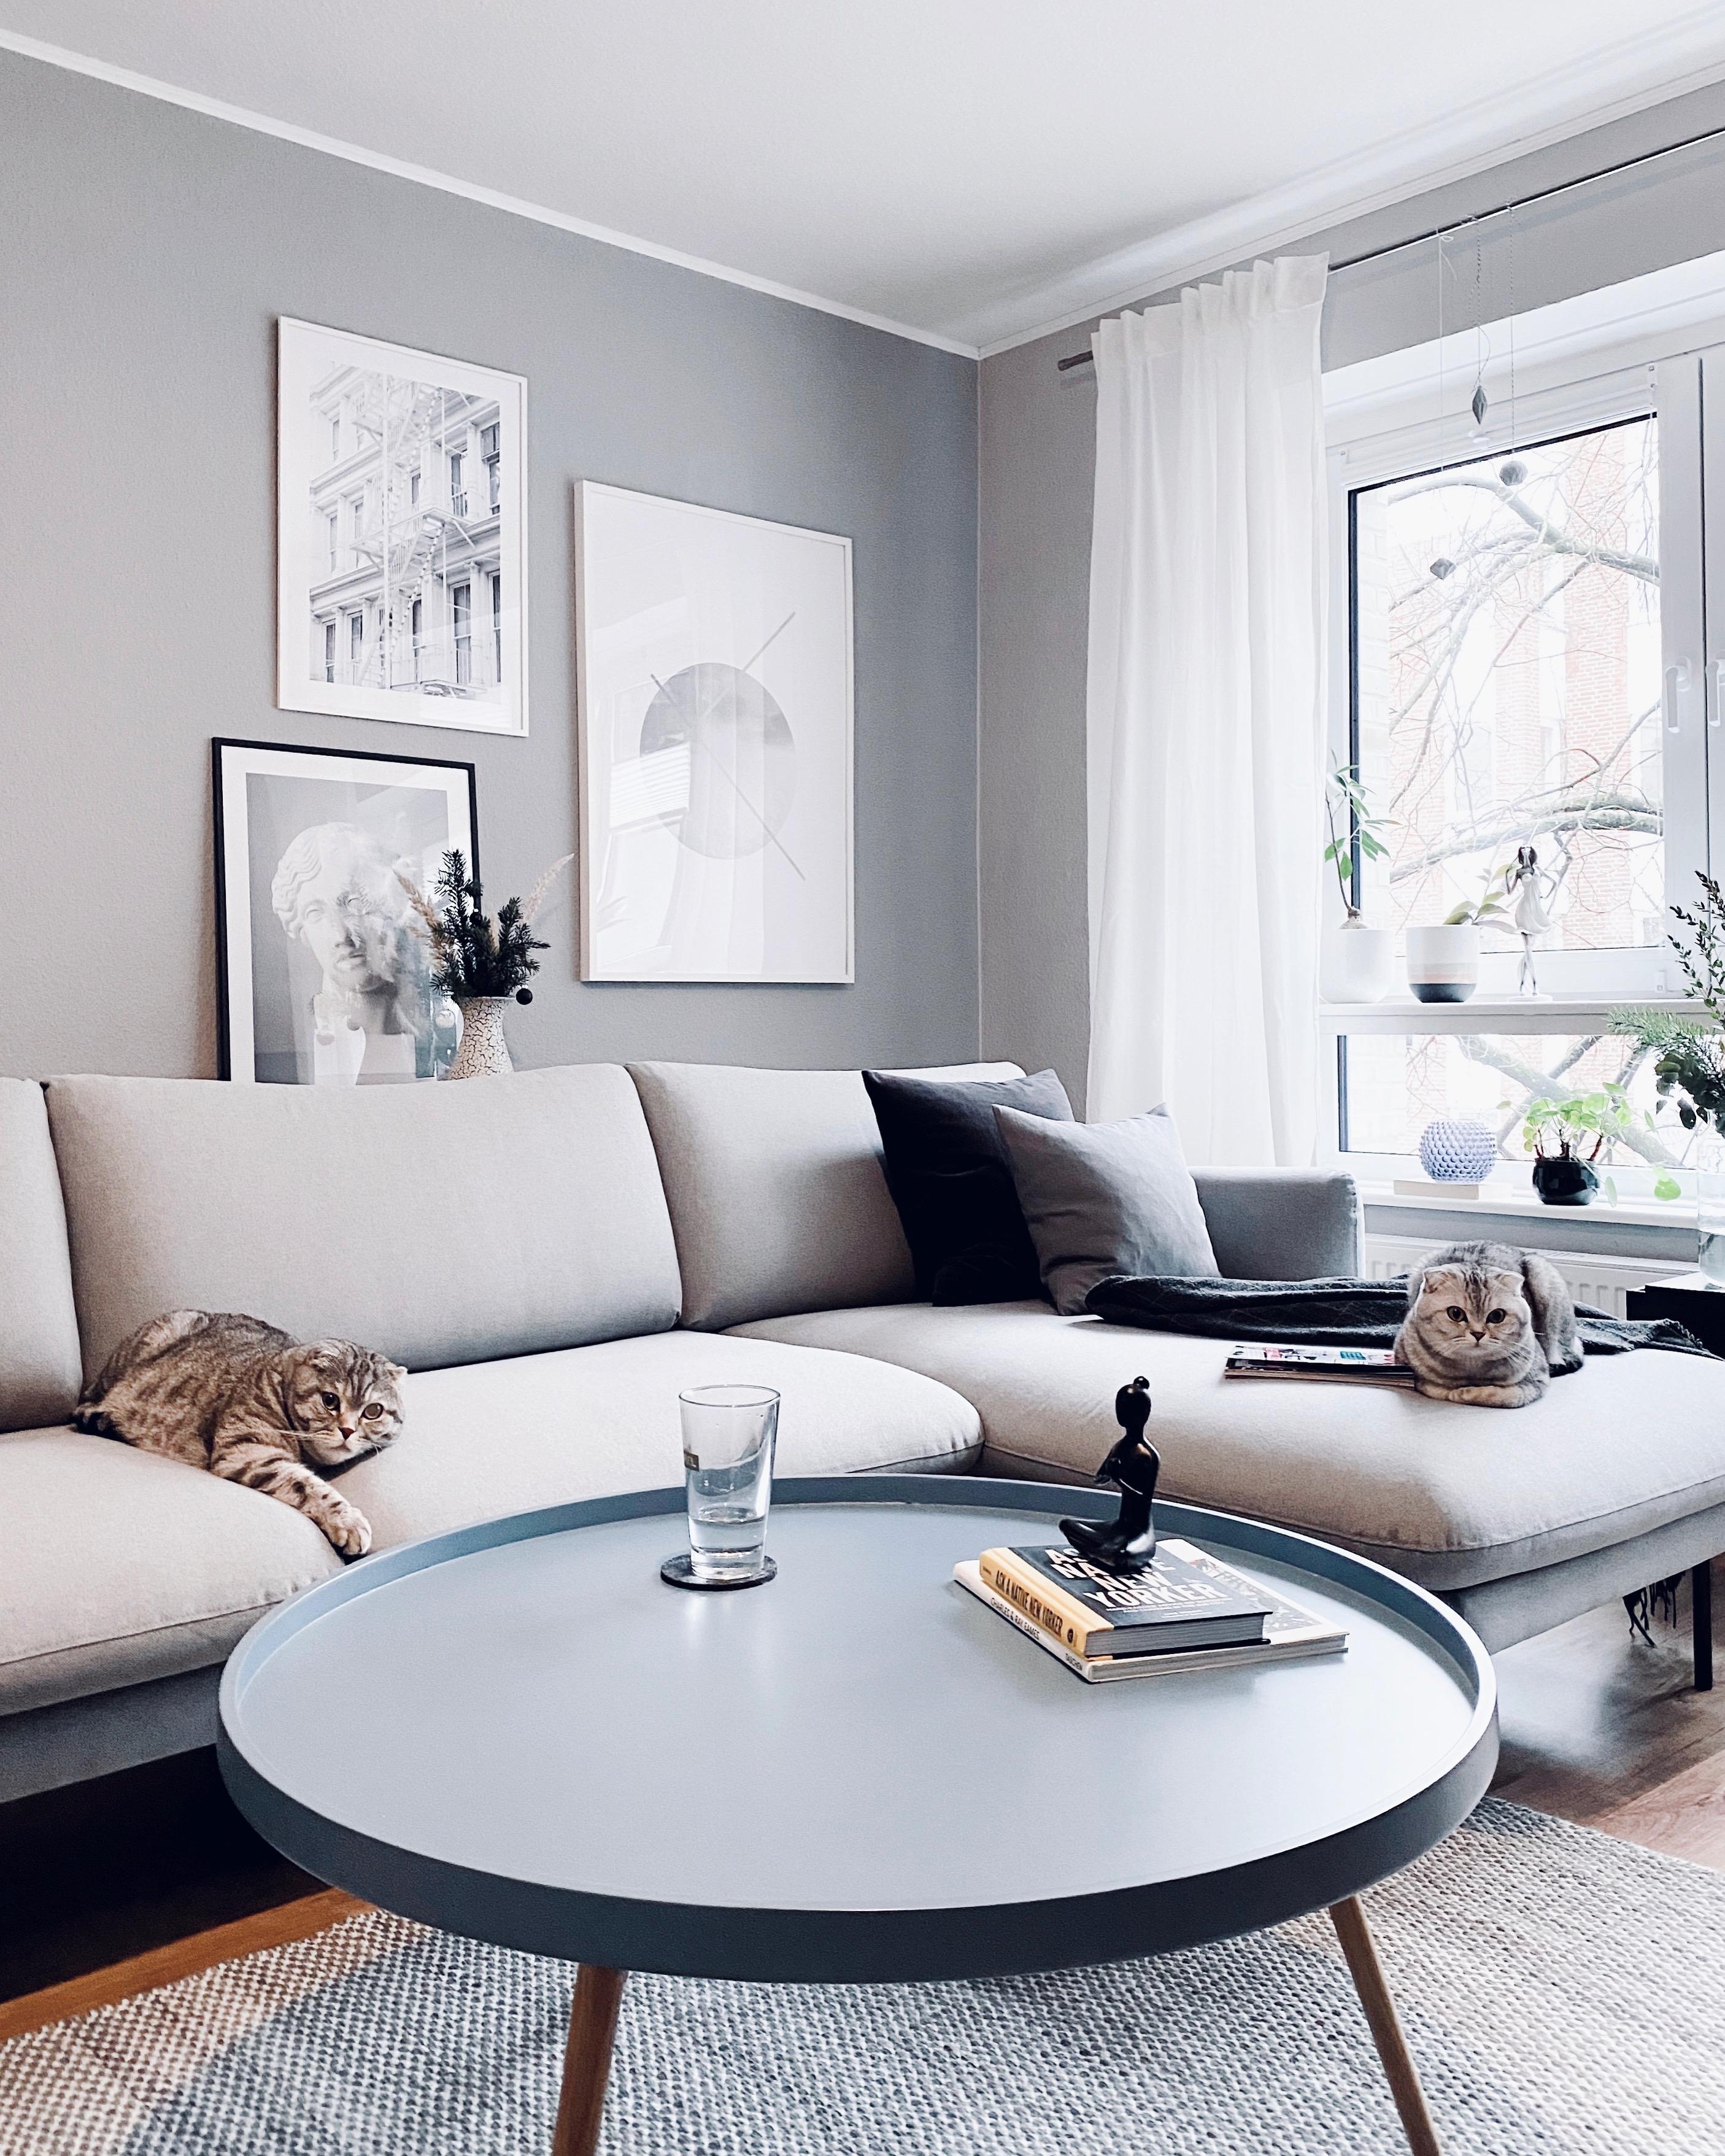 Couchbelagerung )
#livingroom #interior #hygge #mynordicroom #bildergalerie #greylove #scandinaviandesign